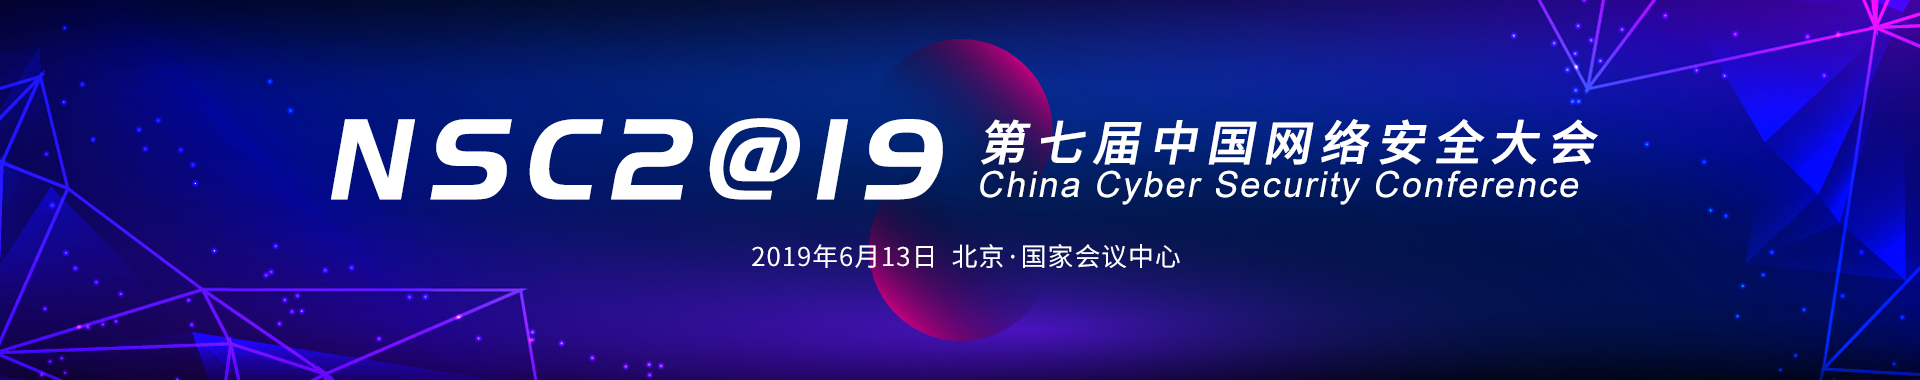 NSC2019中国网络安全大会